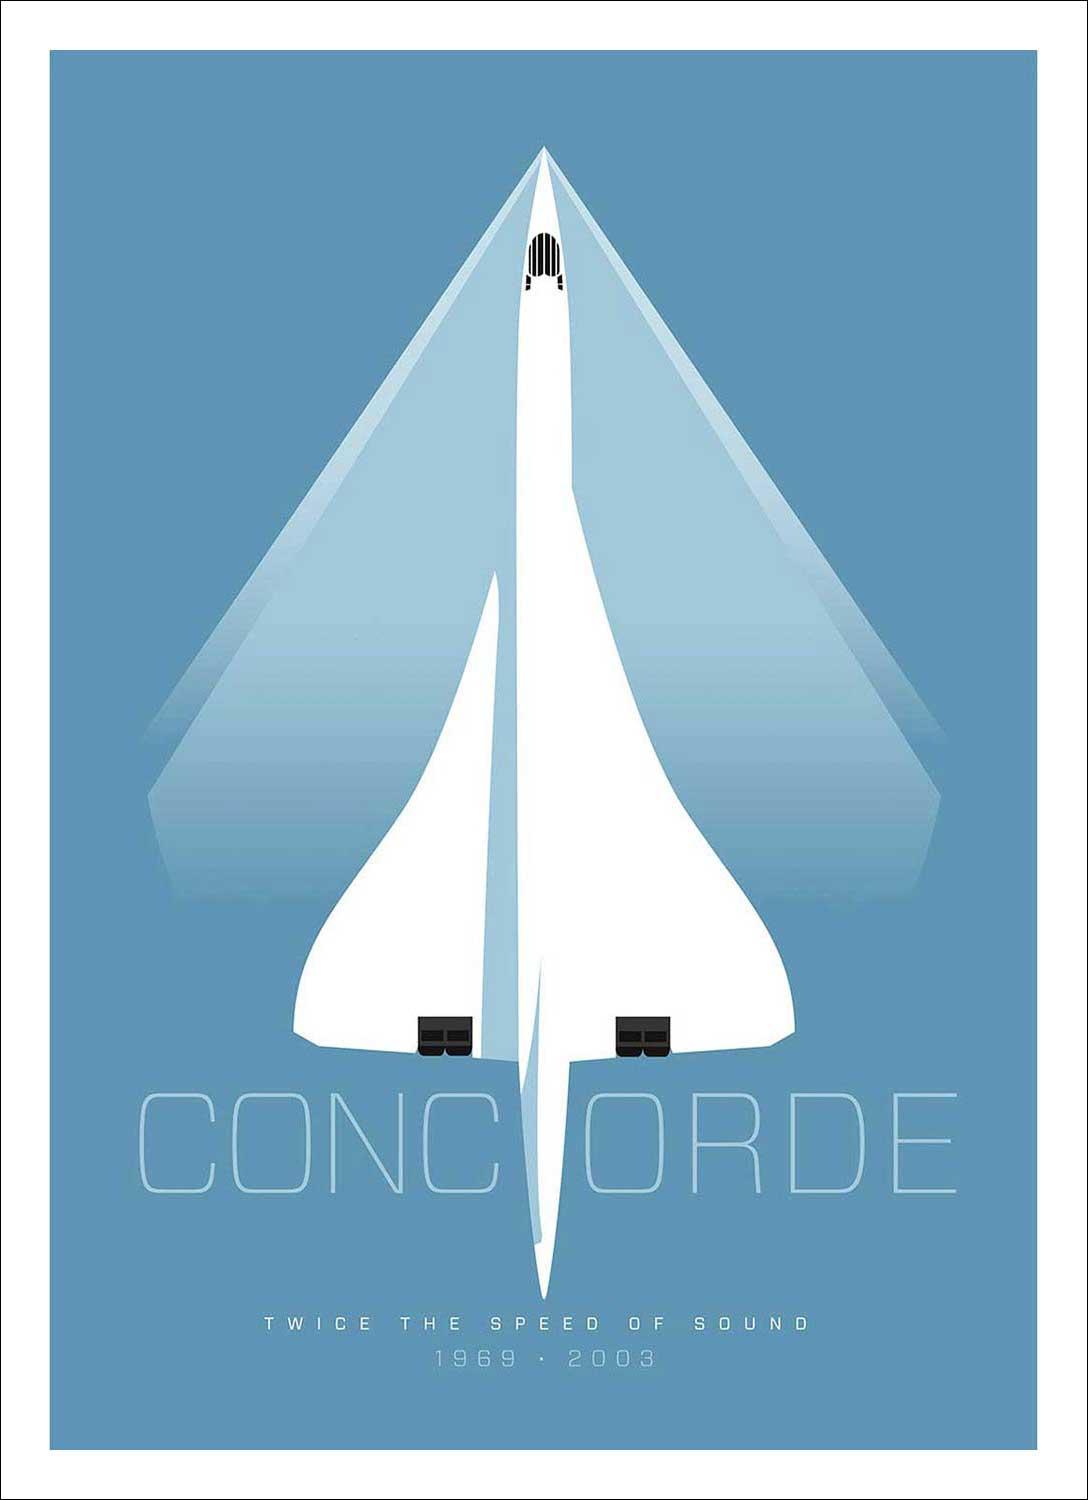 Concorde (Blue) Art Print from an original illustration by artist Peter McDermott